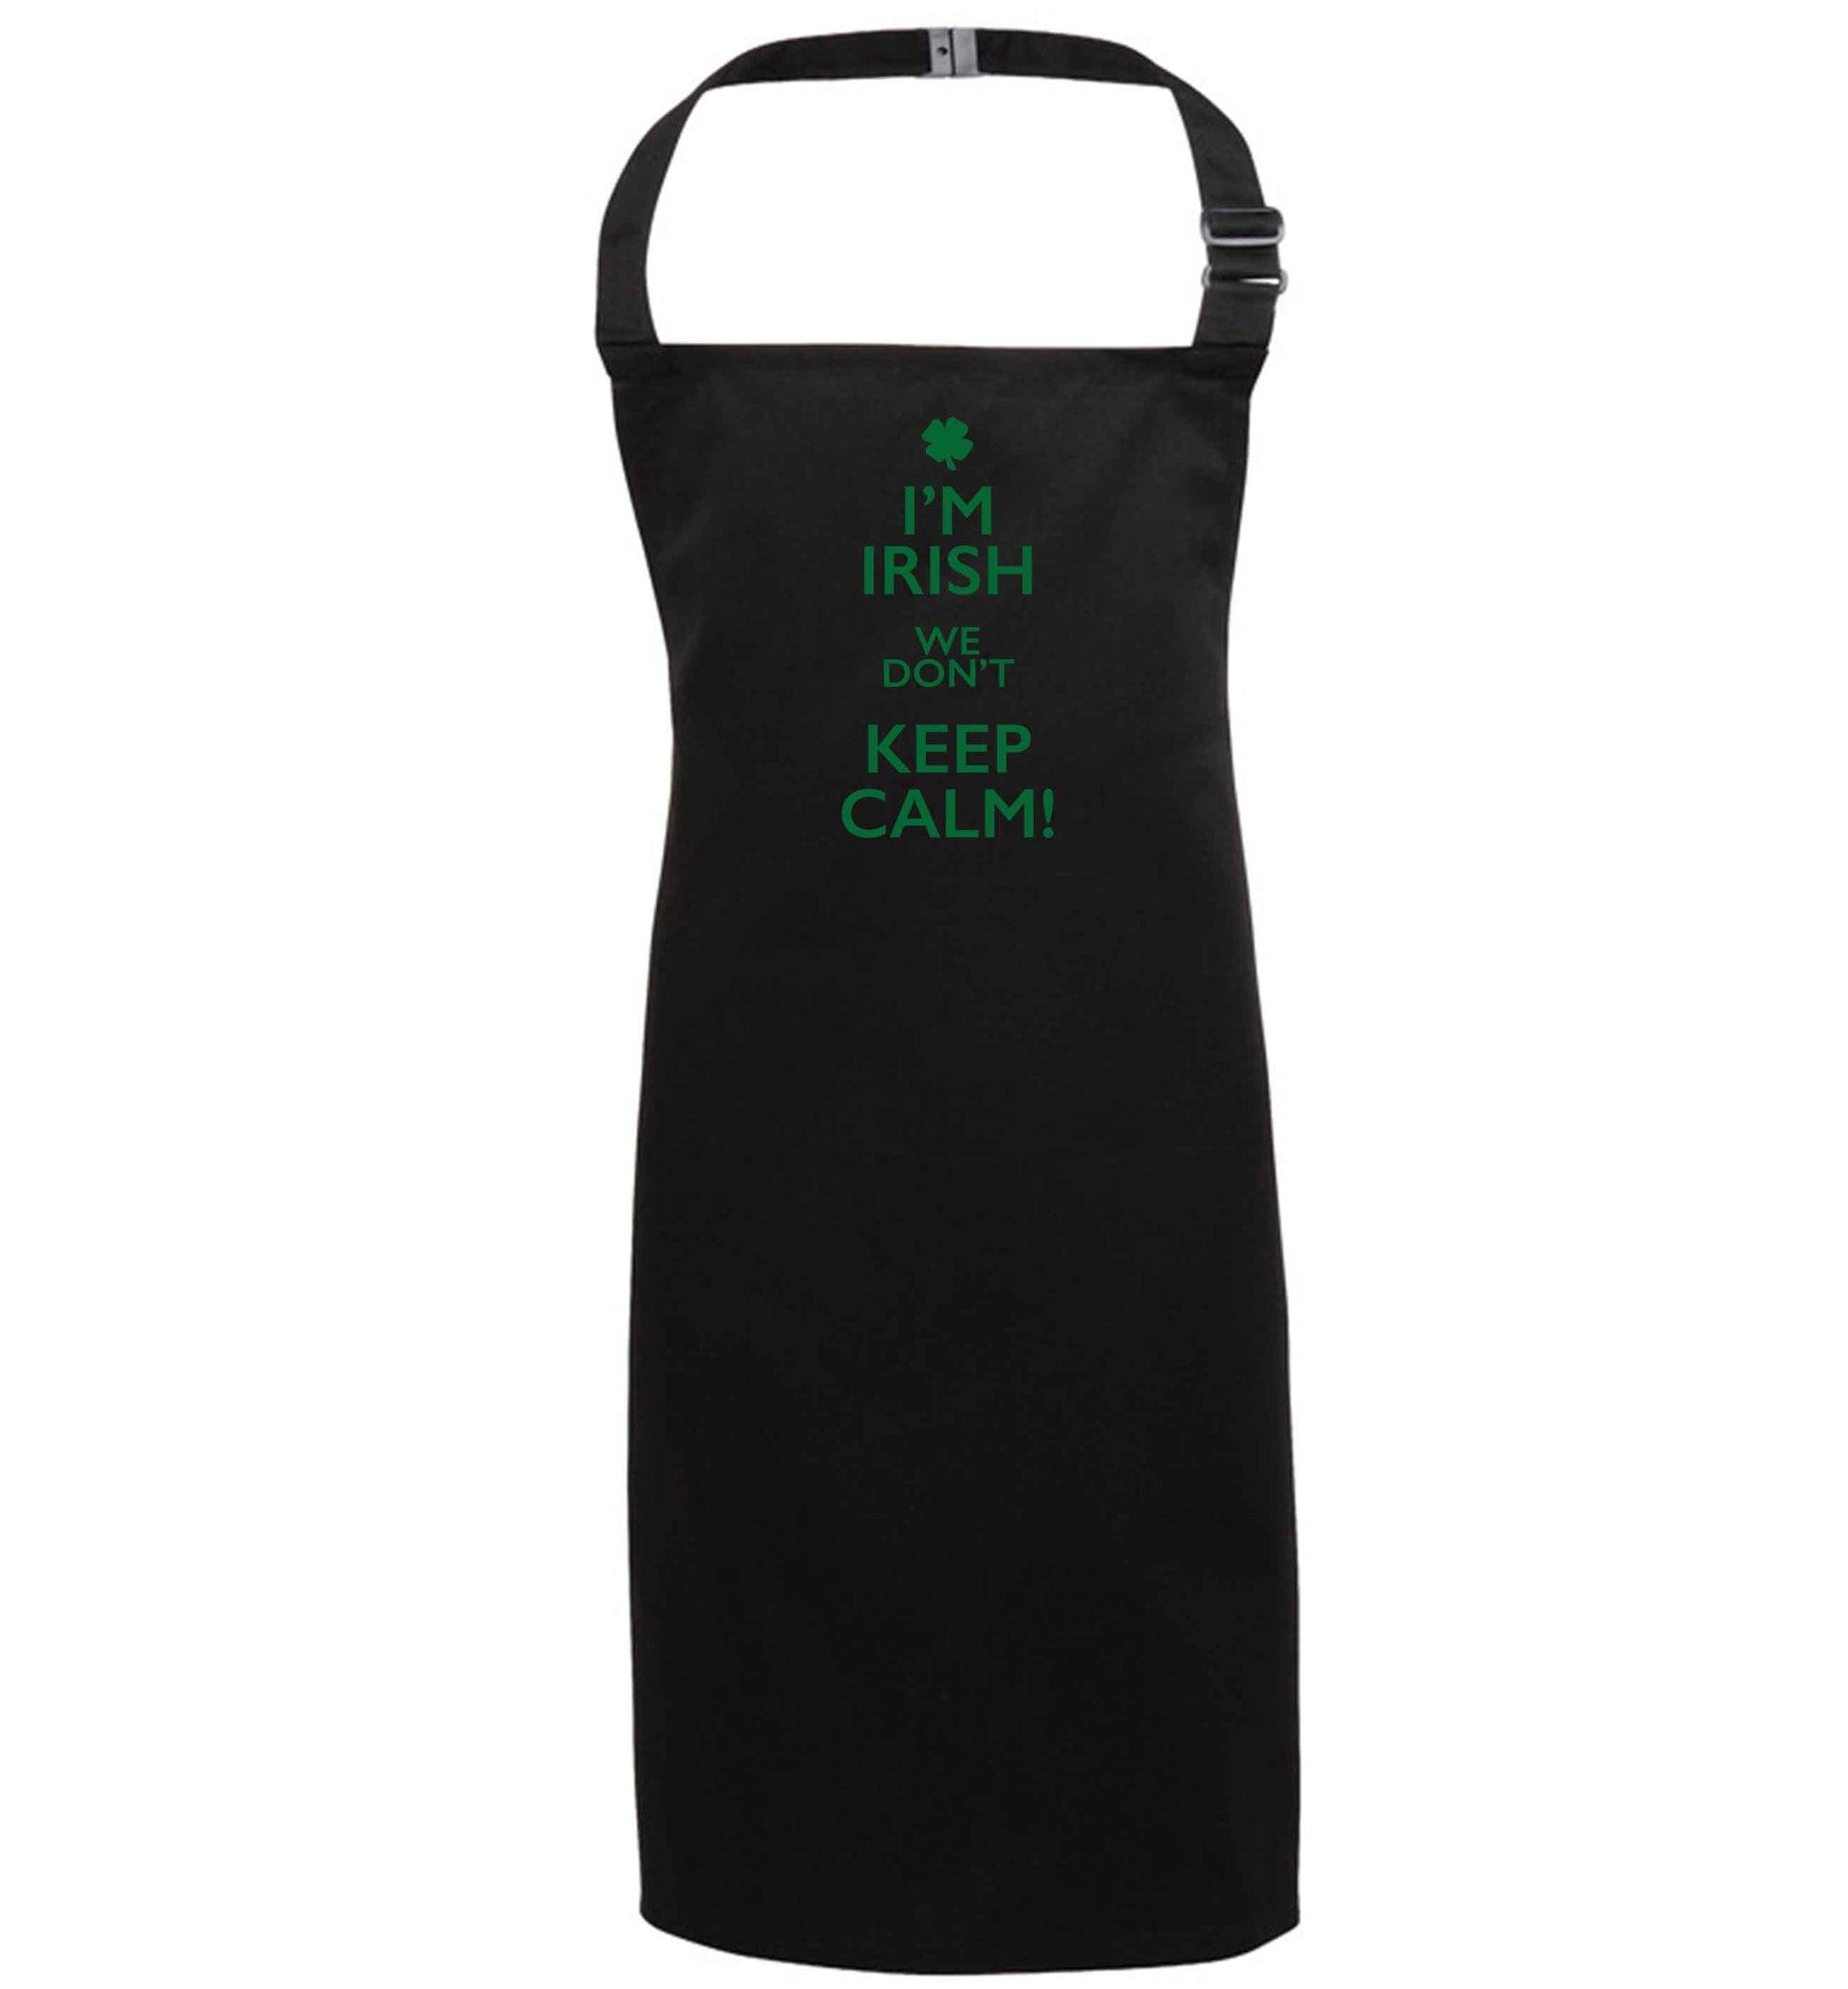 I'm Irish we don't keep calm black apron 7-10 years